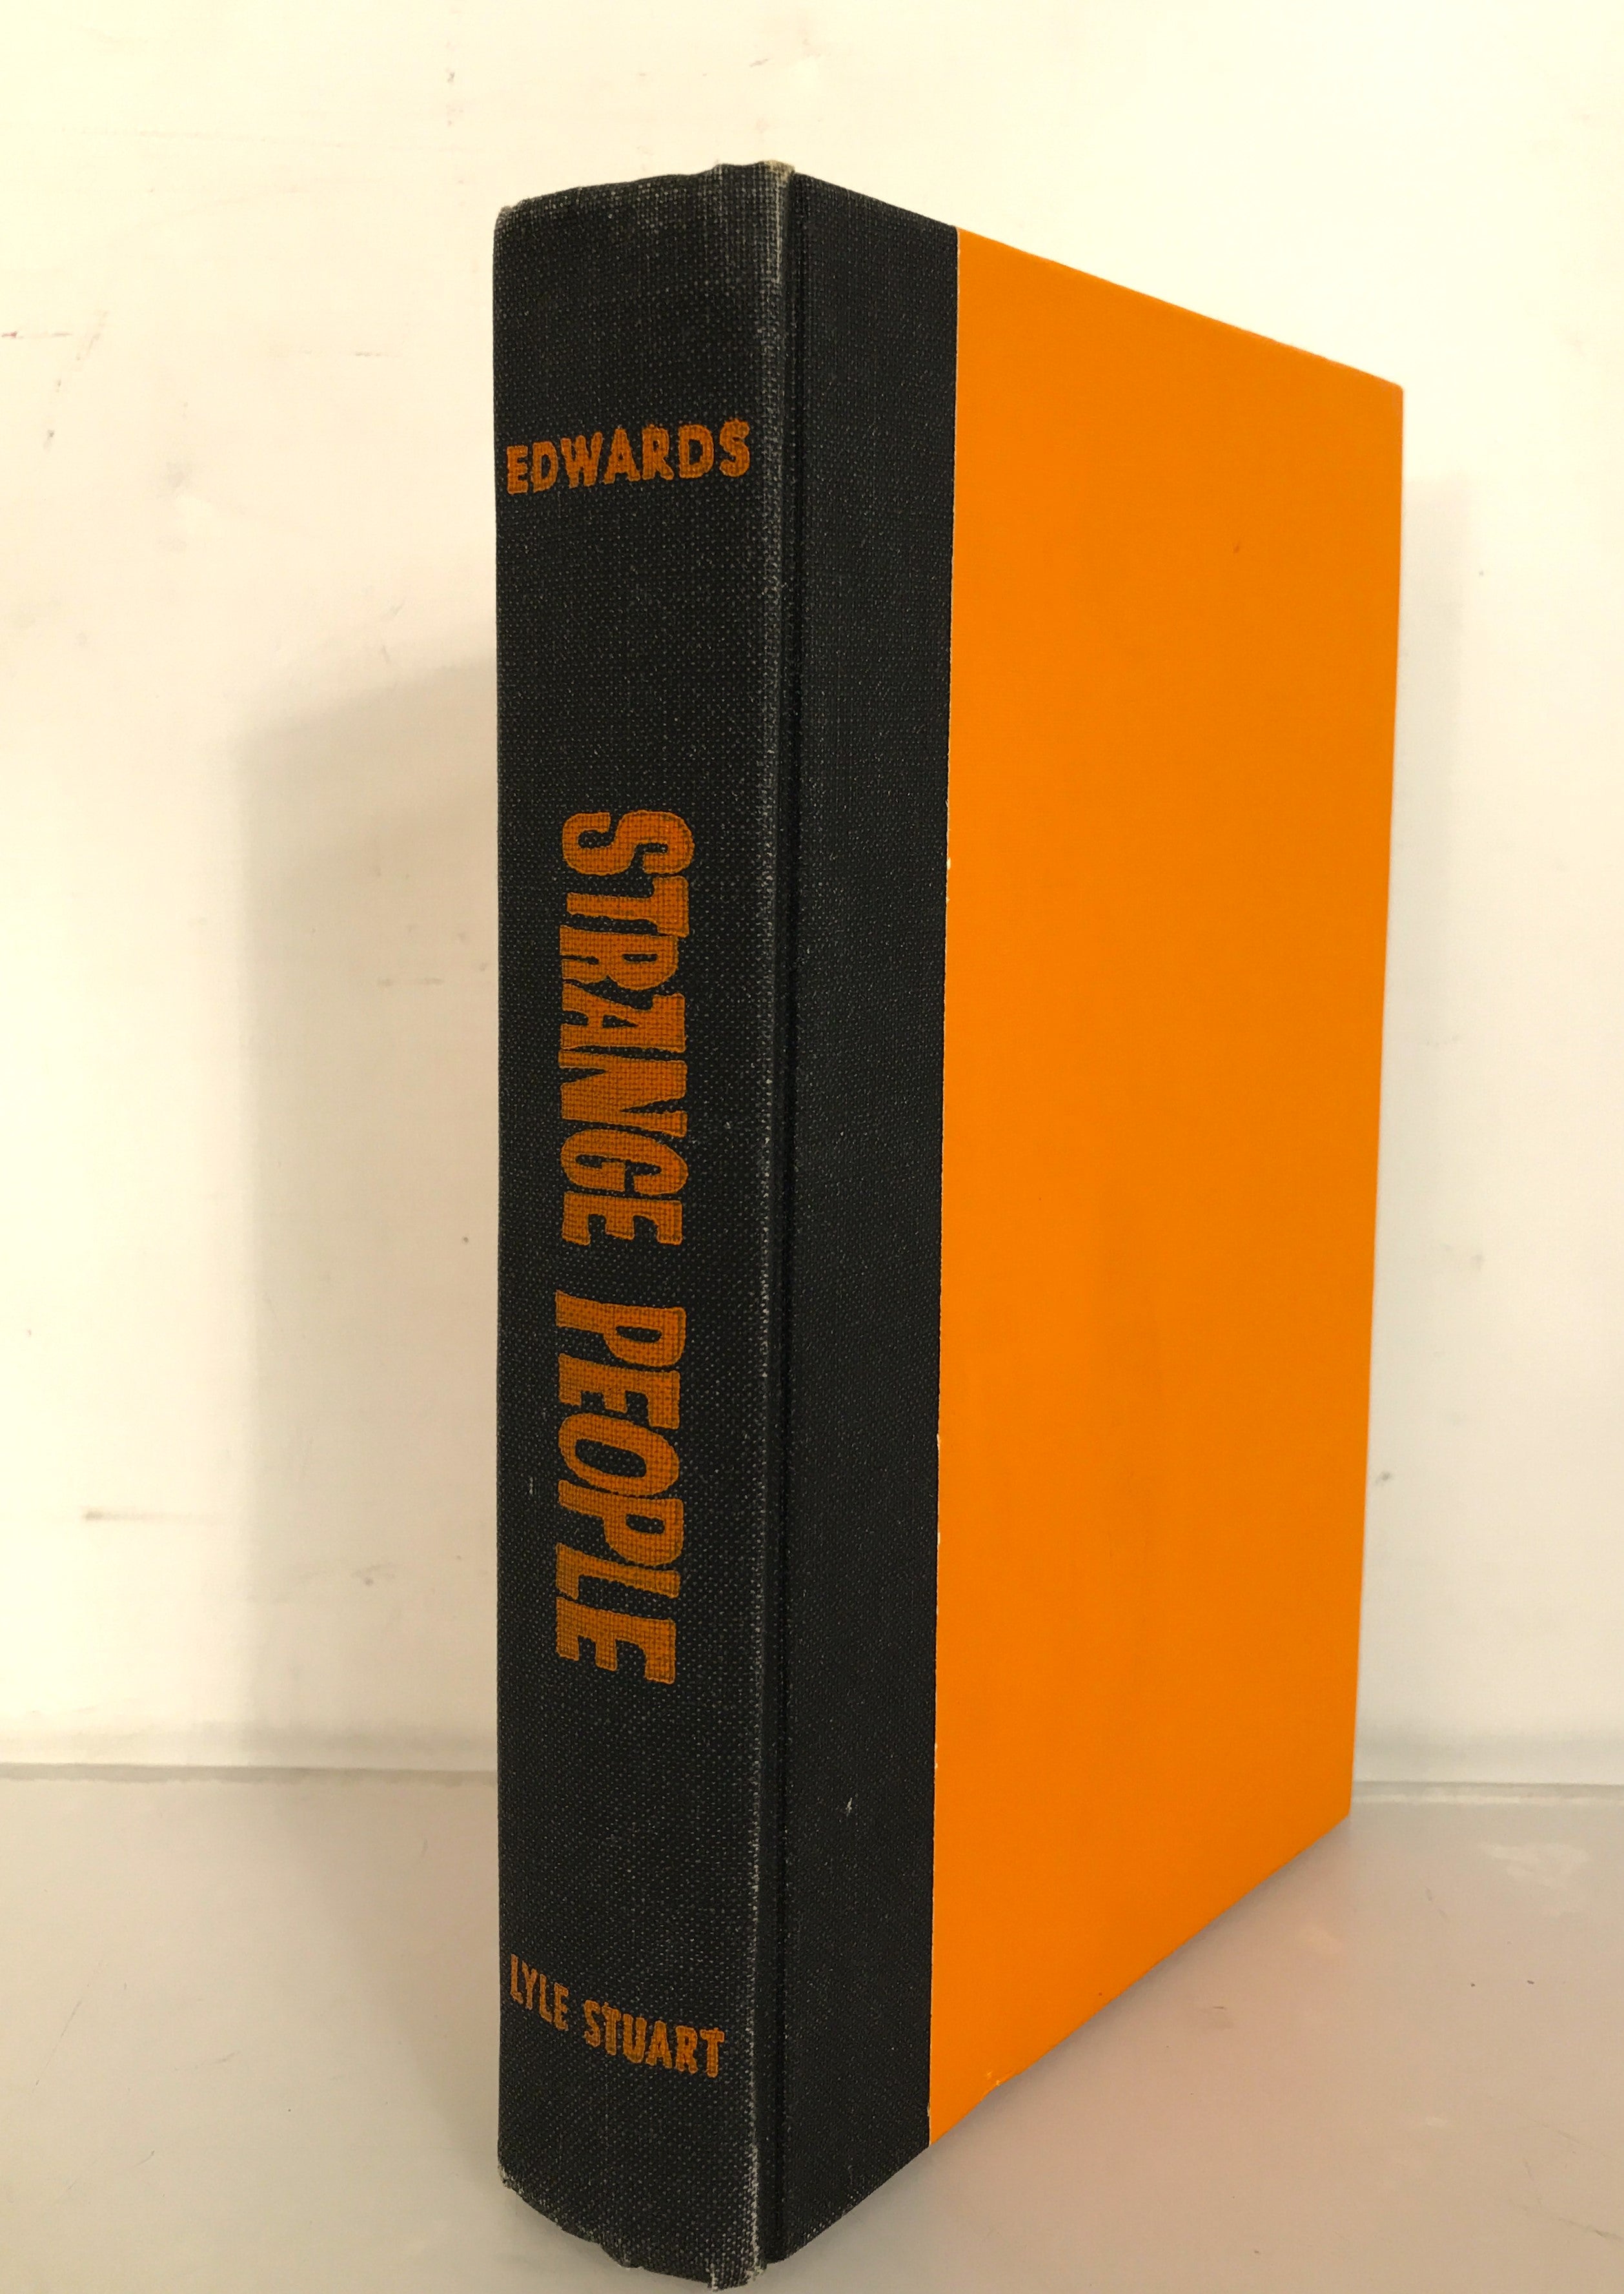 Strange People by Frank Edwards First Edition 1961 HC